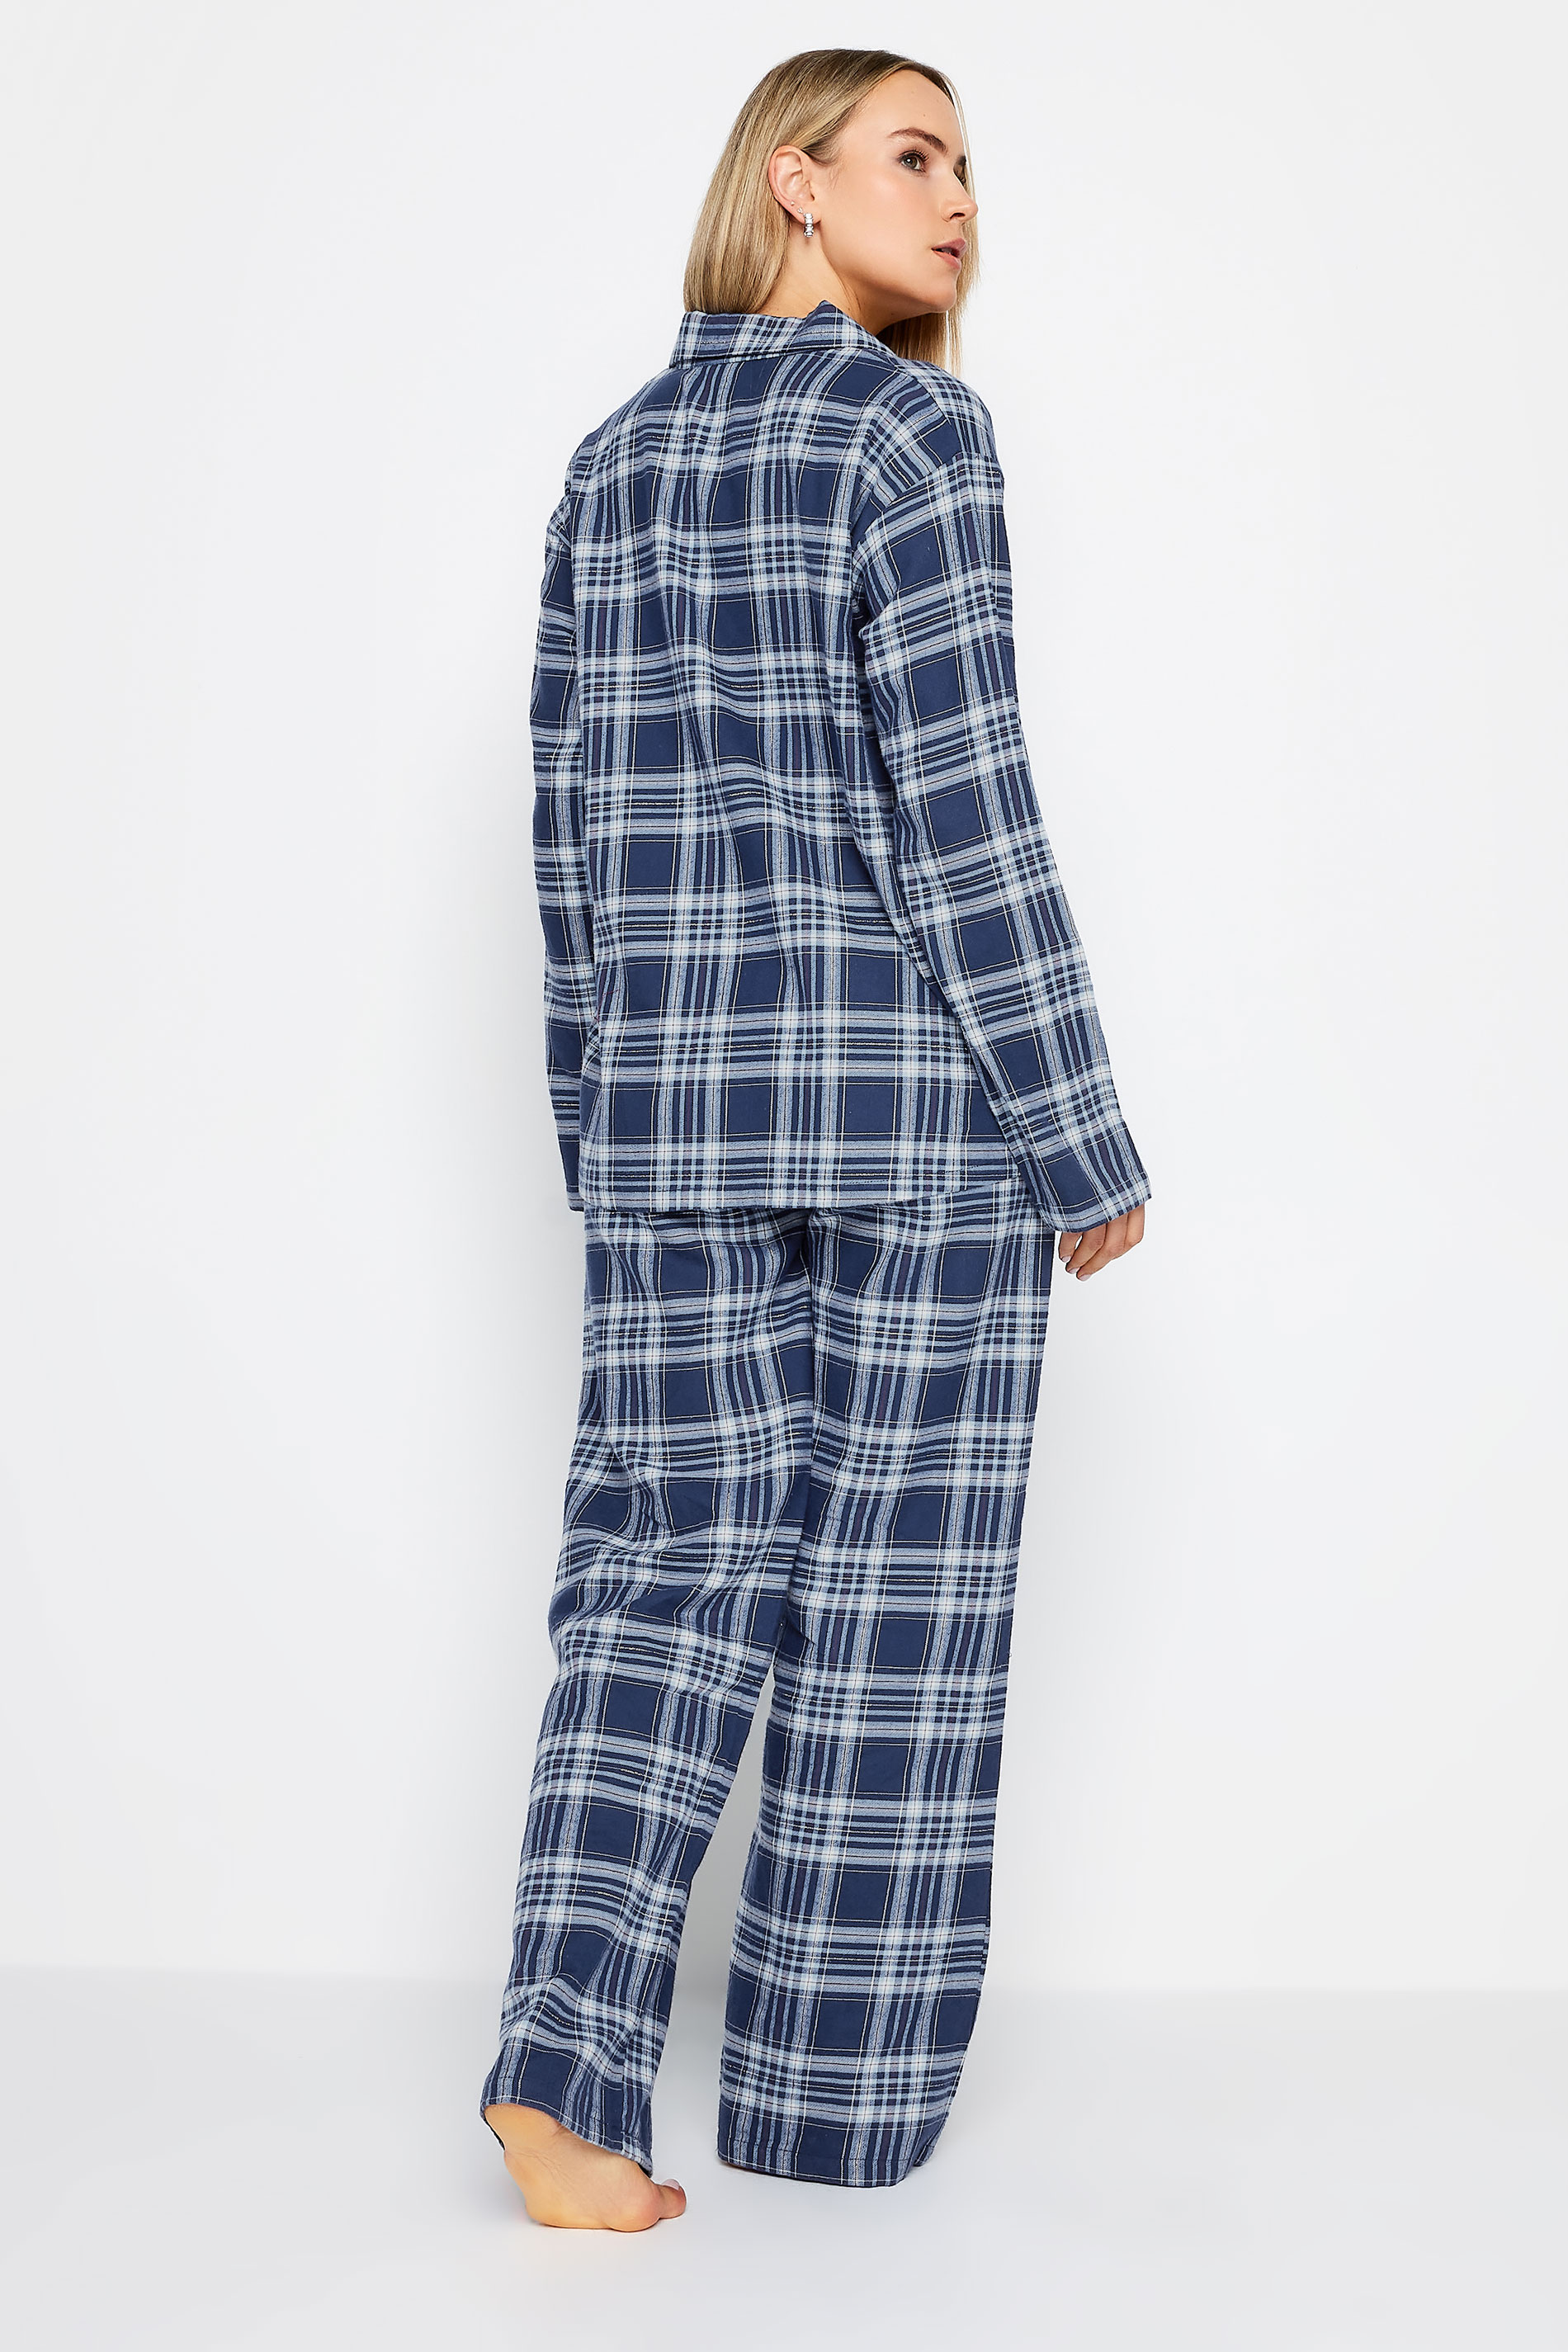 LTS Tall Women's Blue Woven Check Pyjama Set | Long Tall Sally 3